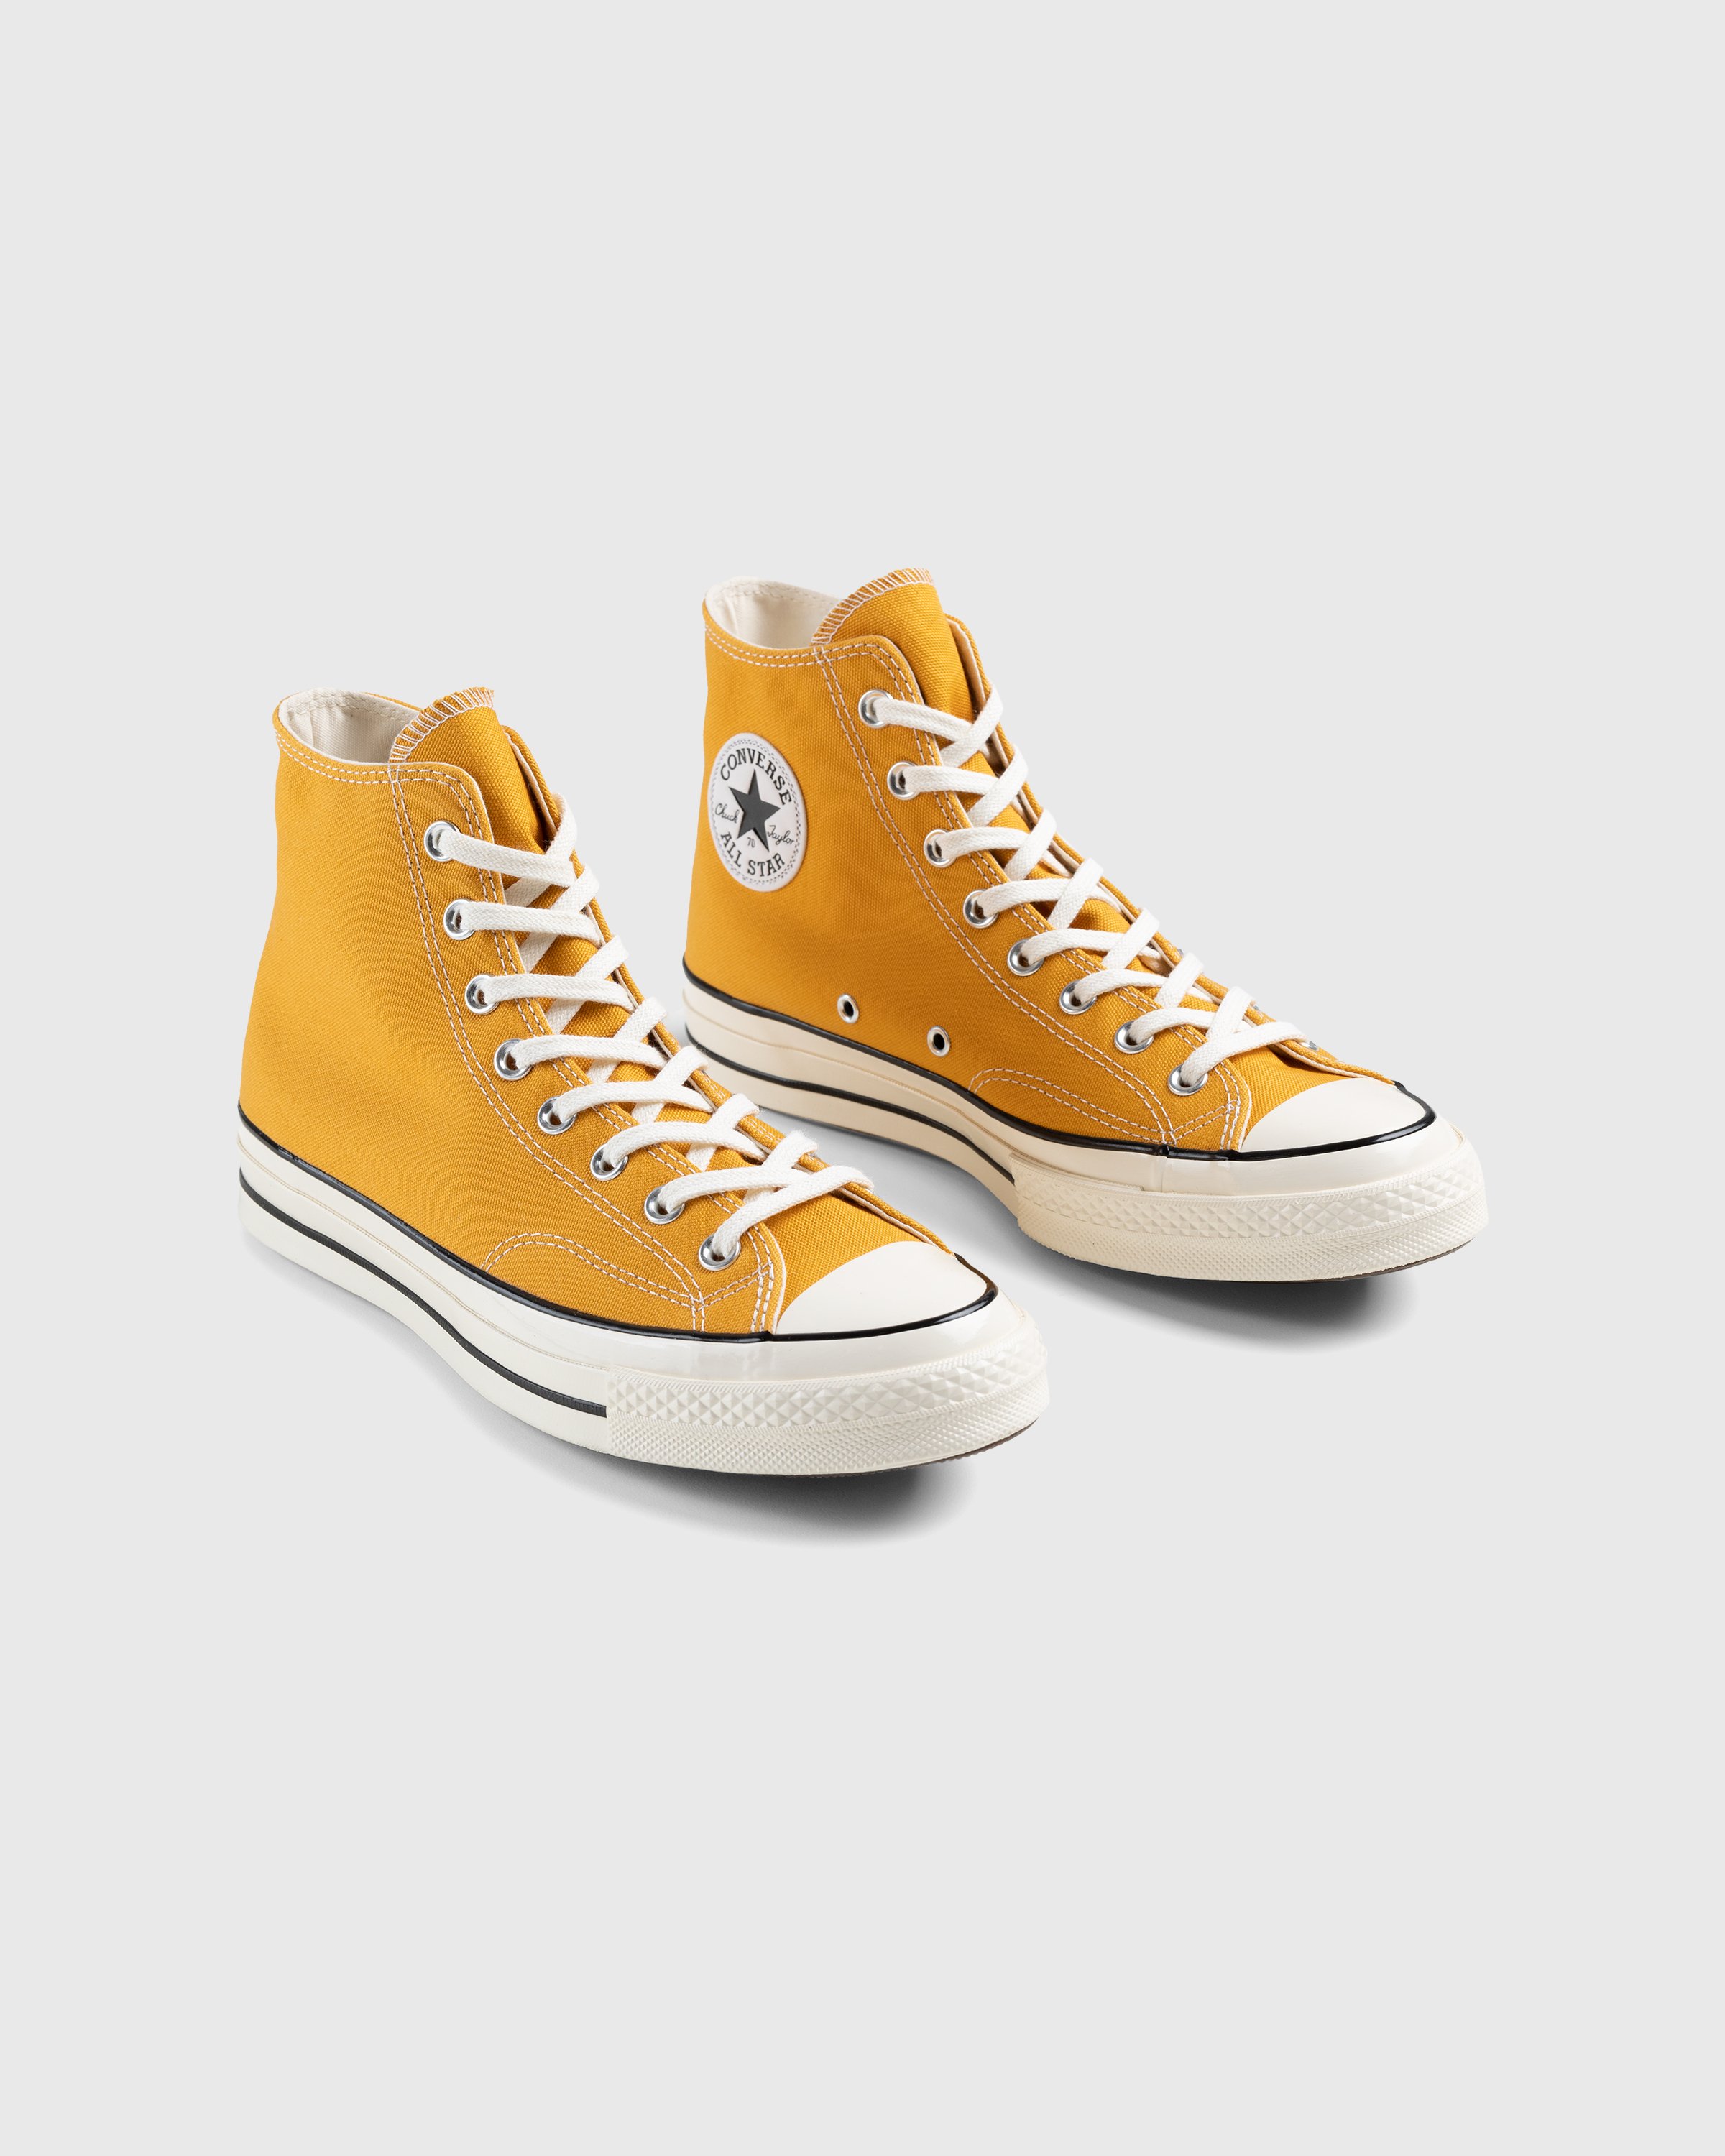 Converse - Chuck 70 Hi Sunflower/Black/Egret - Footwear - Orange - Image 3